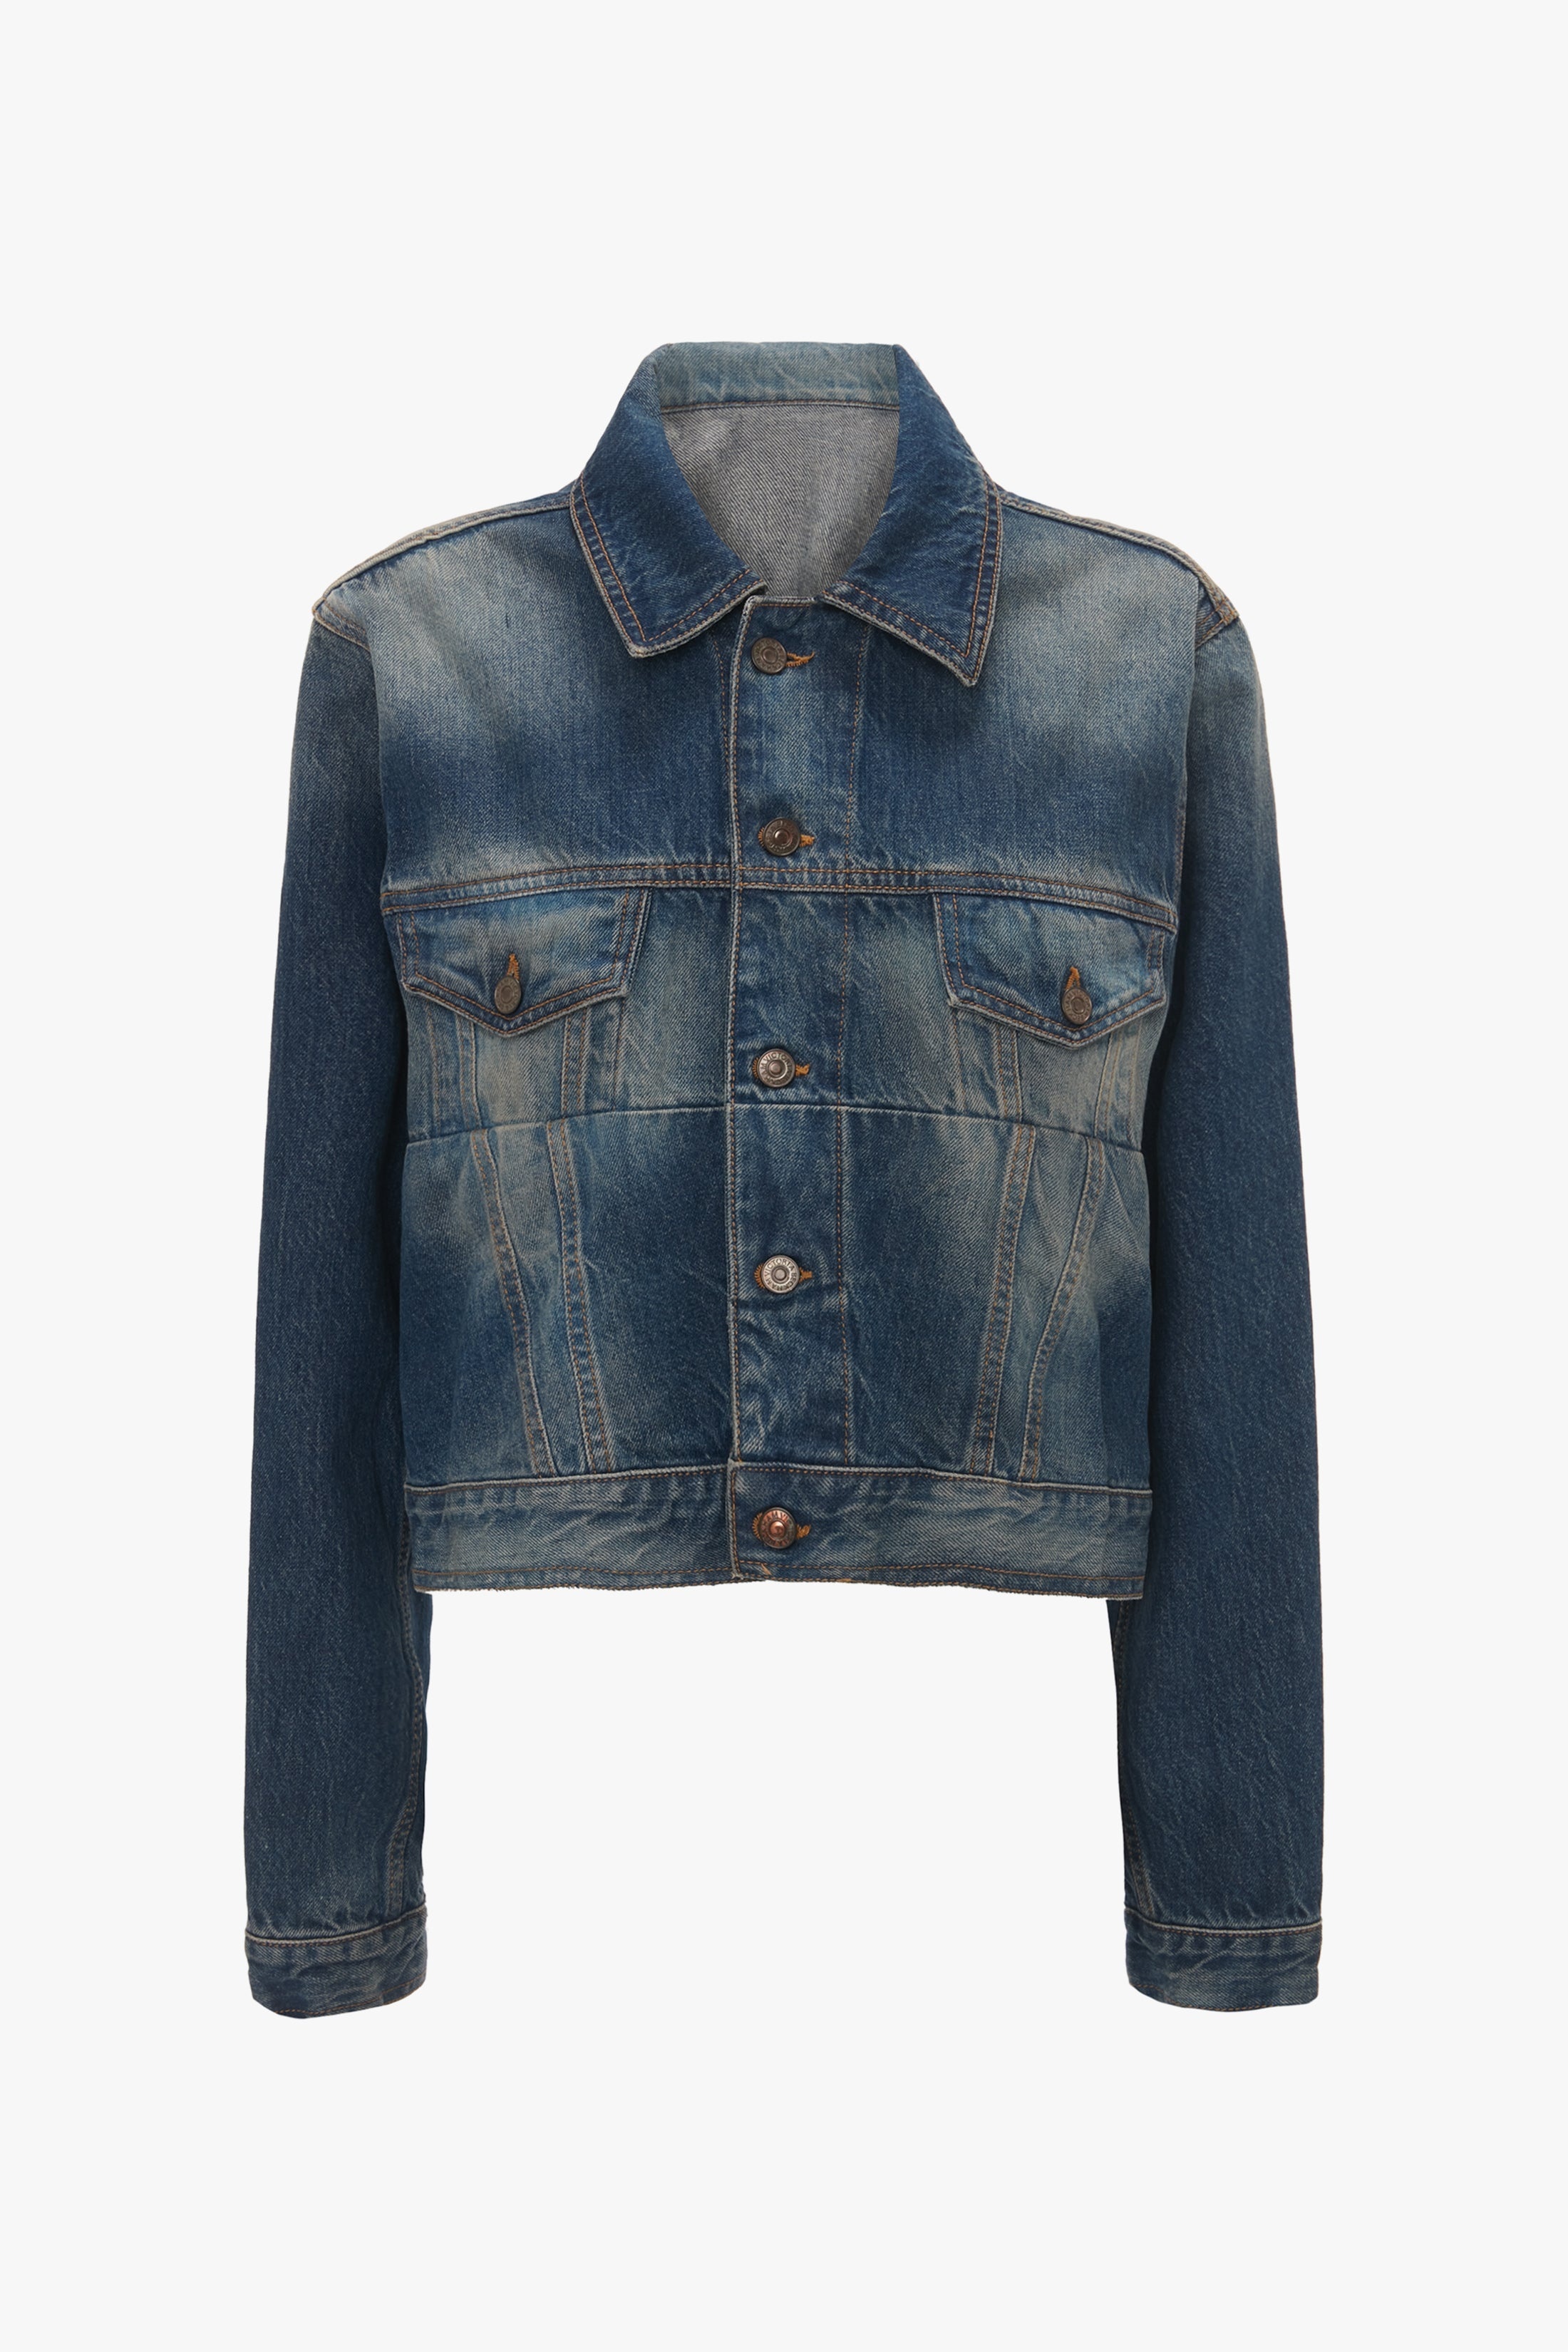 Cropped Denim Jacket In Heavy Vintage Indigo Wash - 1